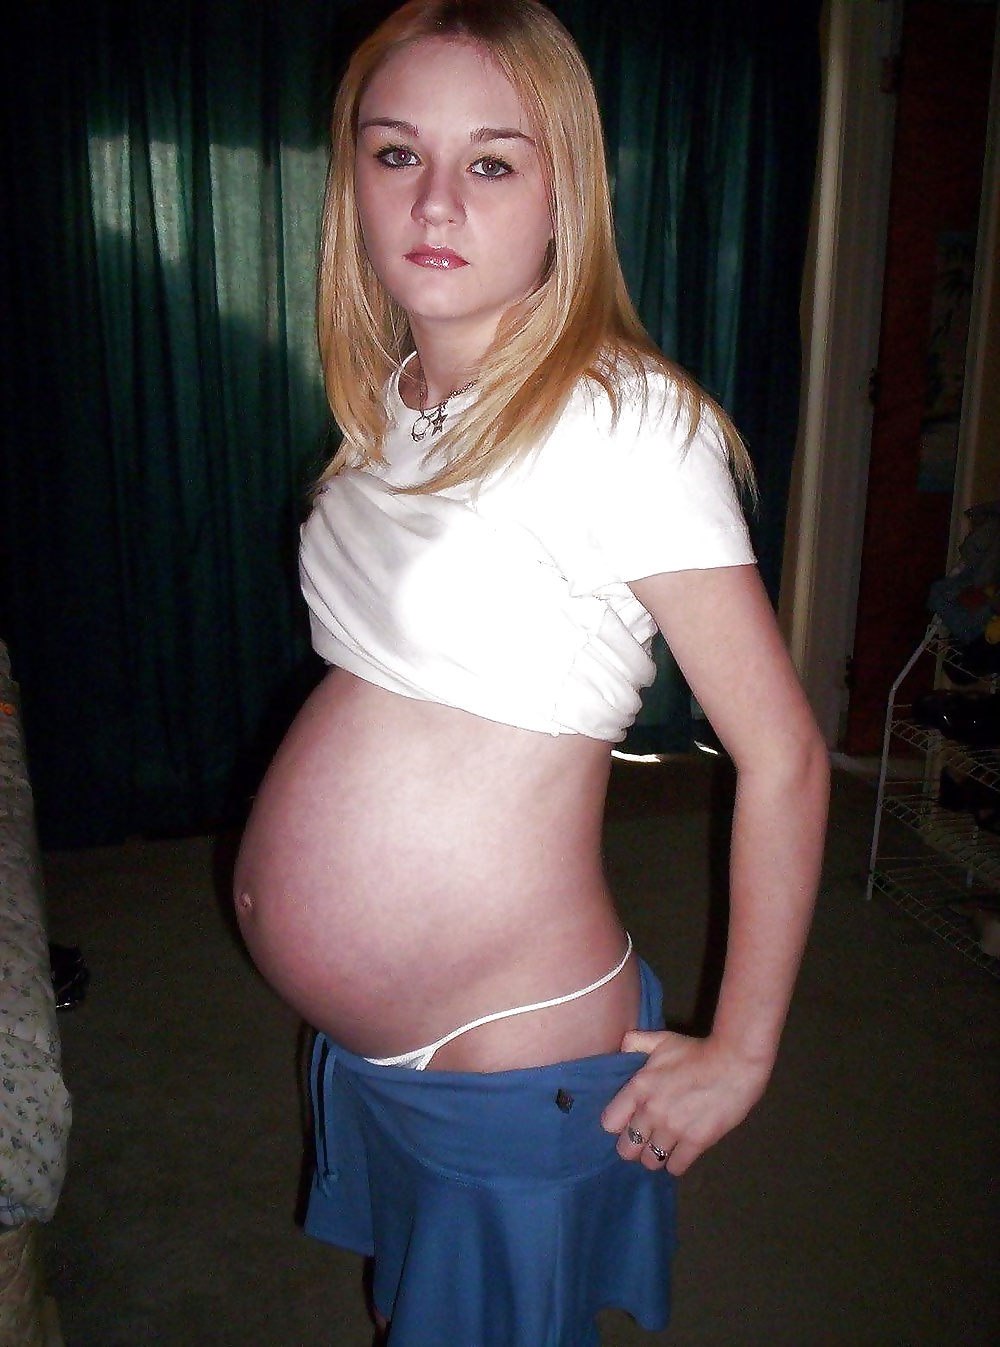 Pregnant Women are Beautiful! #27130389